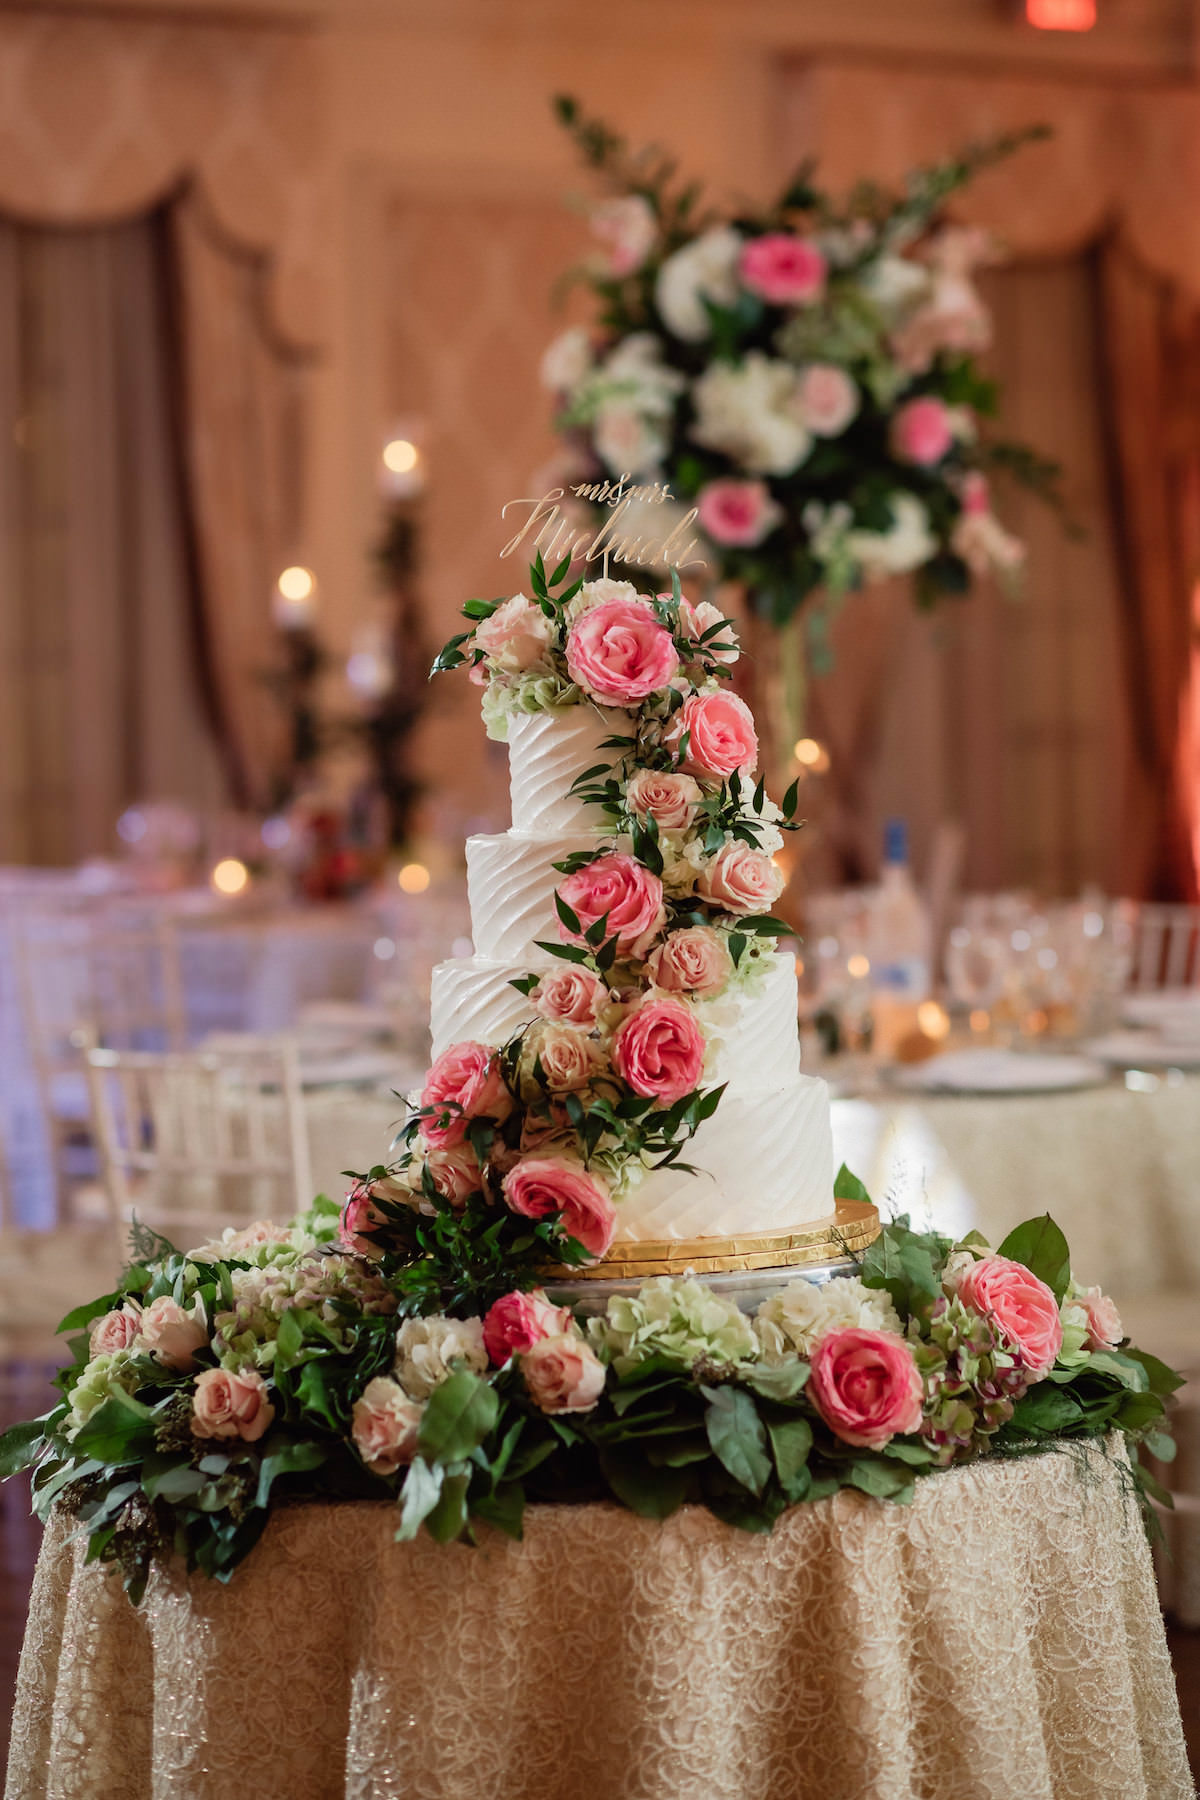 Glamorous floral wedding cake - Photography: Charming Images